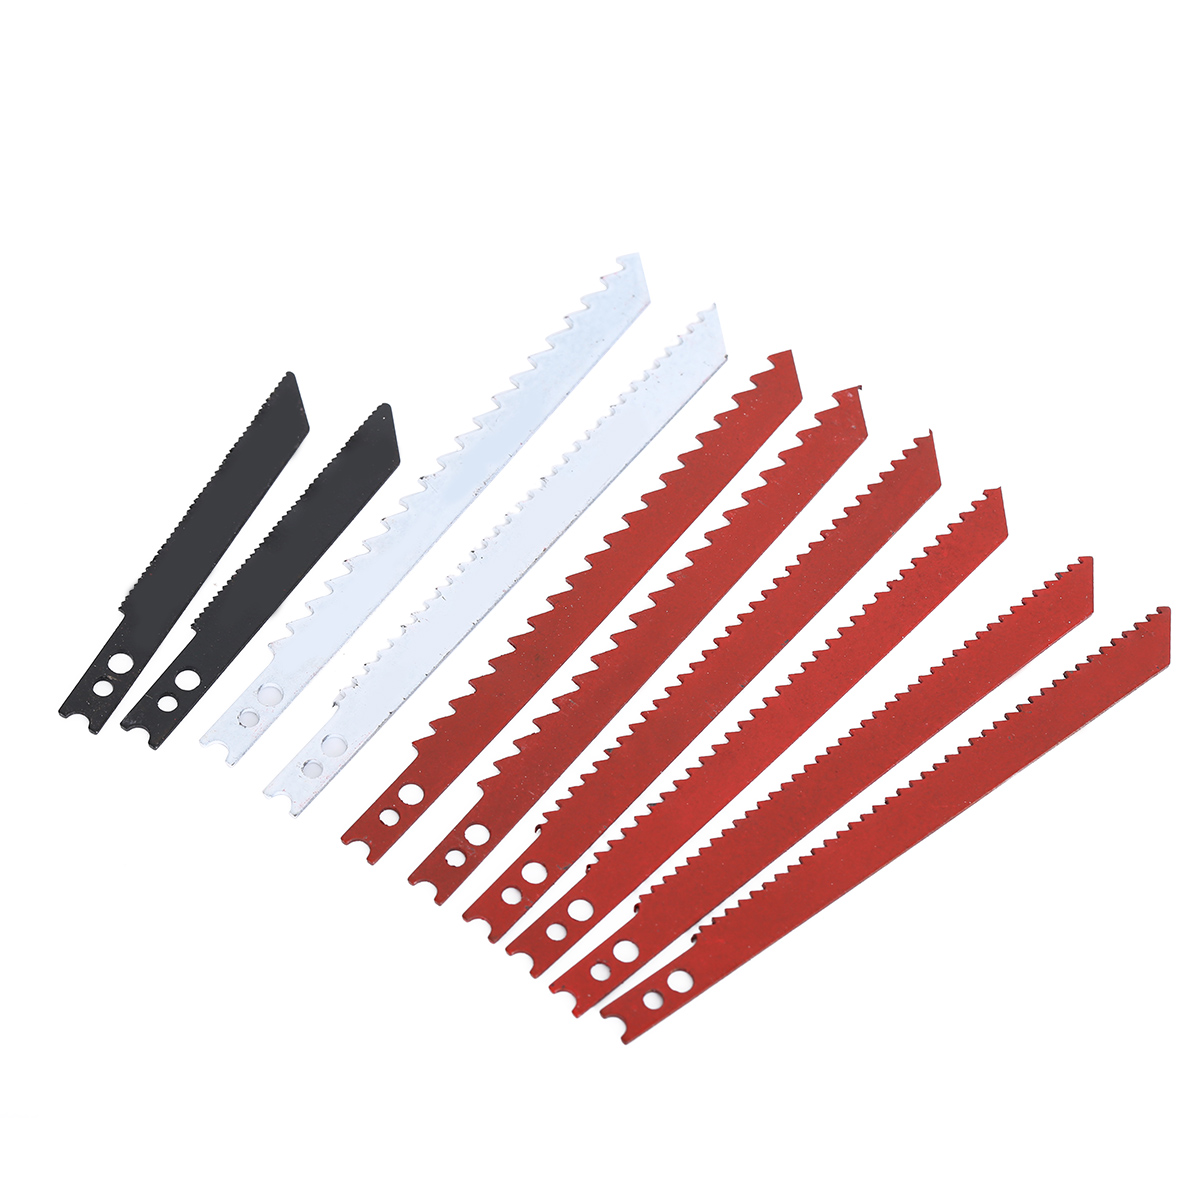 10pcs U-shank Jig Saw Blades Set for Black and Decker Jigsaw Metal Plastic Wood Blades